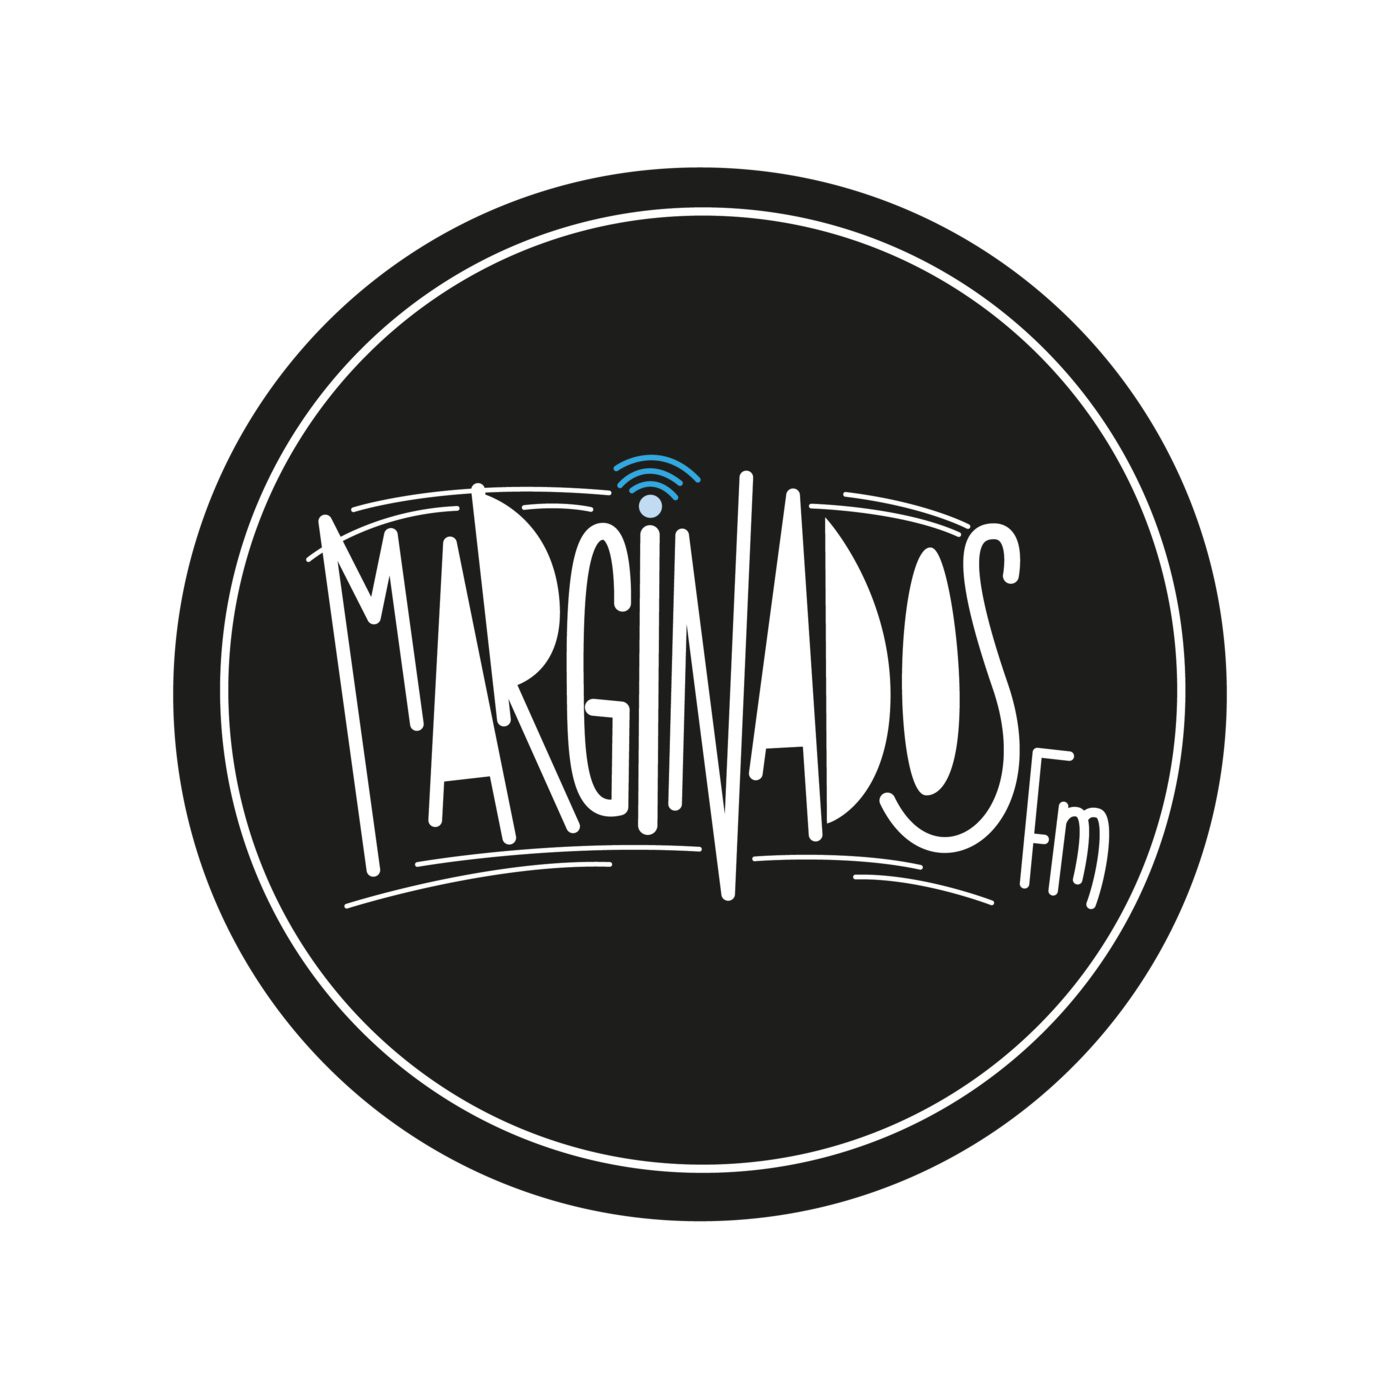 MARGINADOS FM